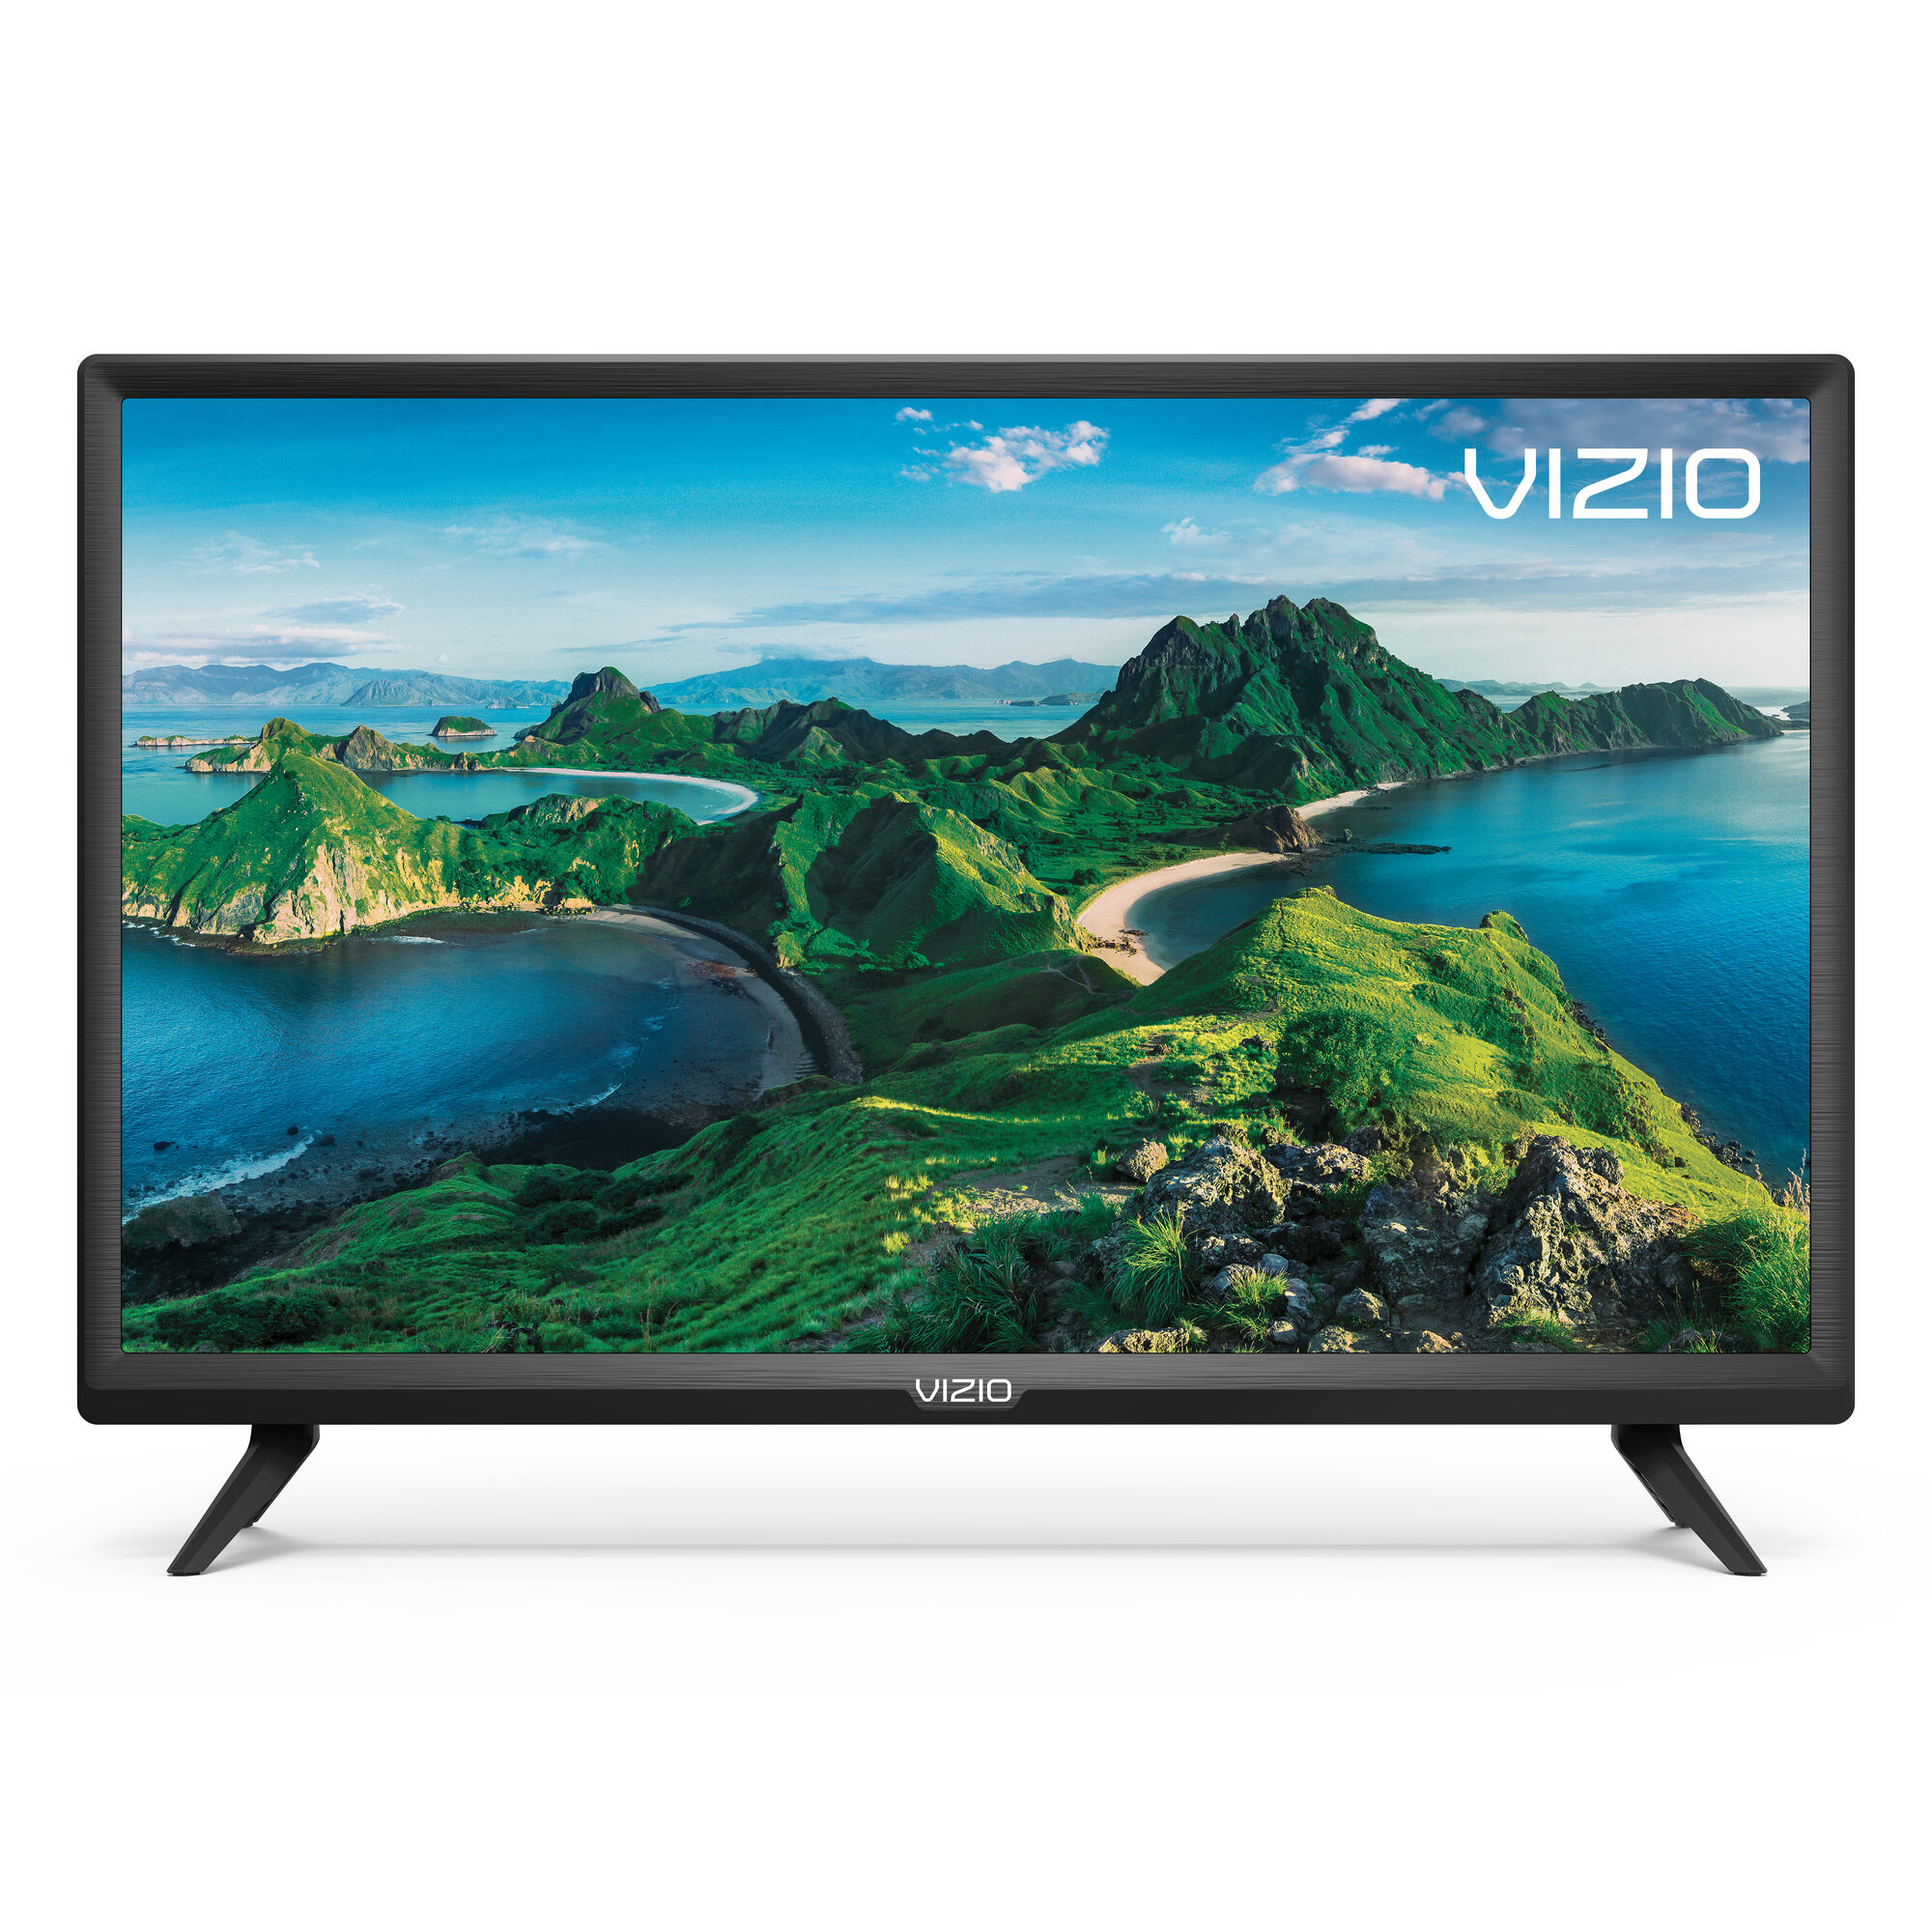 Vizio 40" Class (39.5" Diag.) 1080P LED LCD TV - image 4 of 21